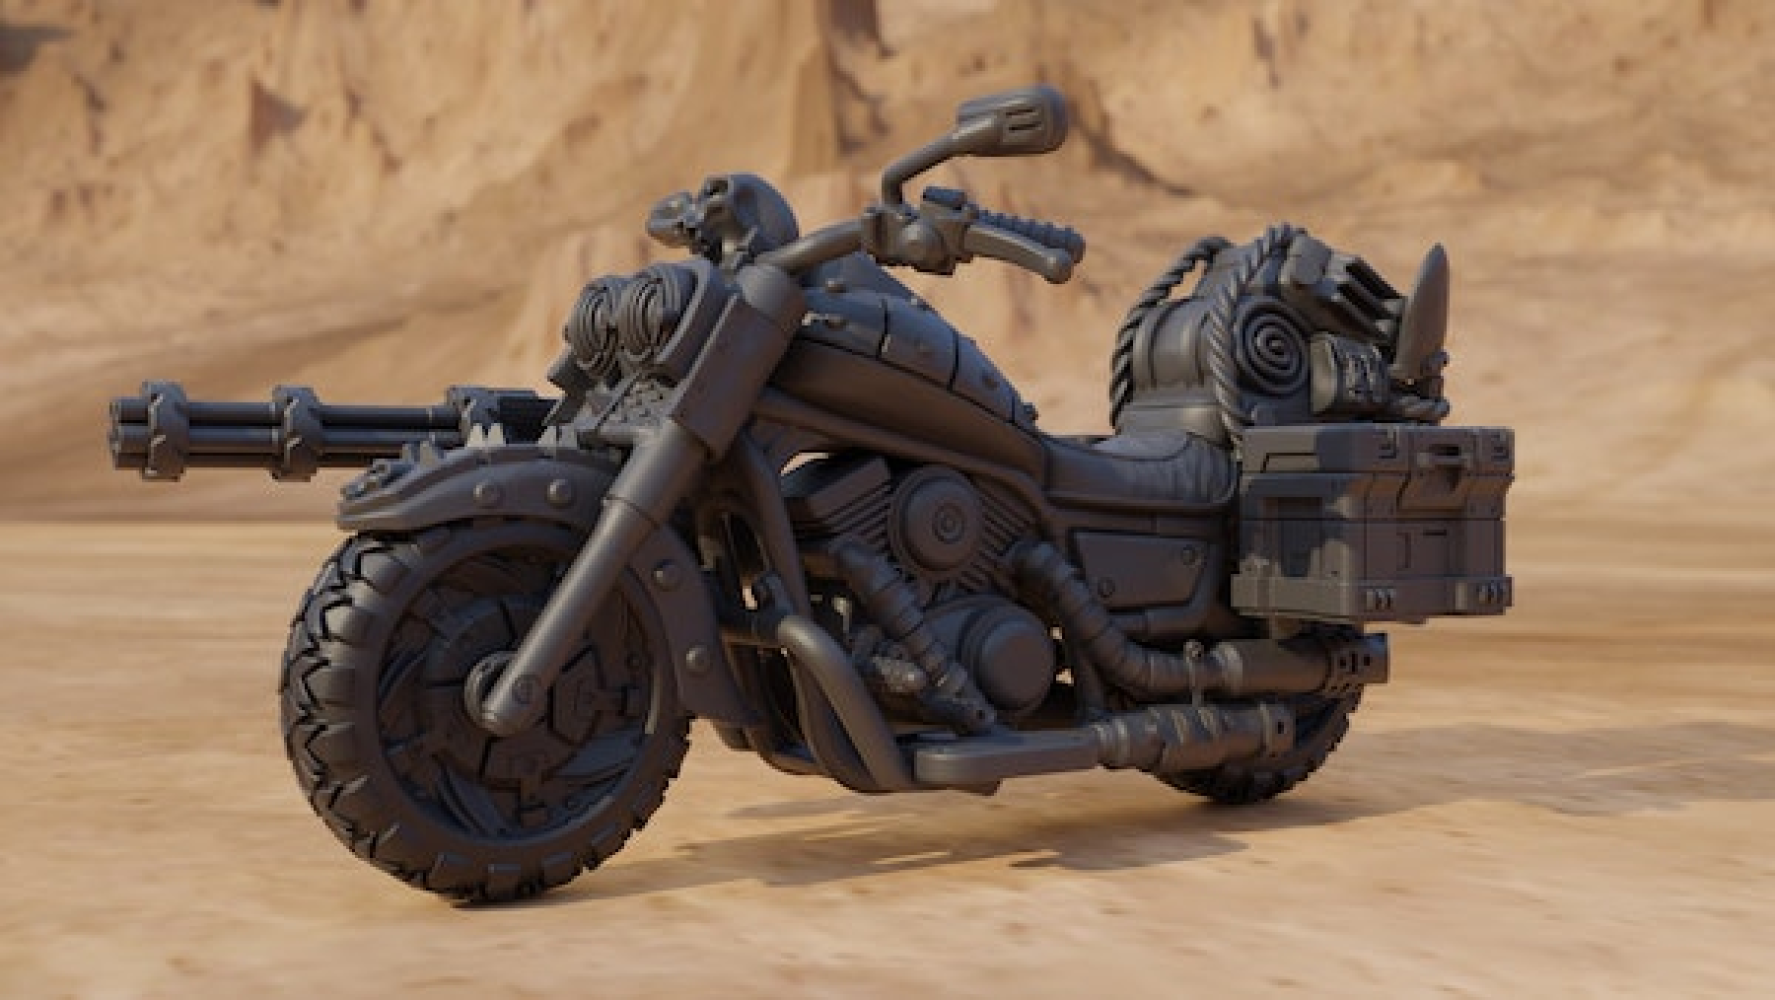 Apocalypse Motorcycle - Single Model's Cover